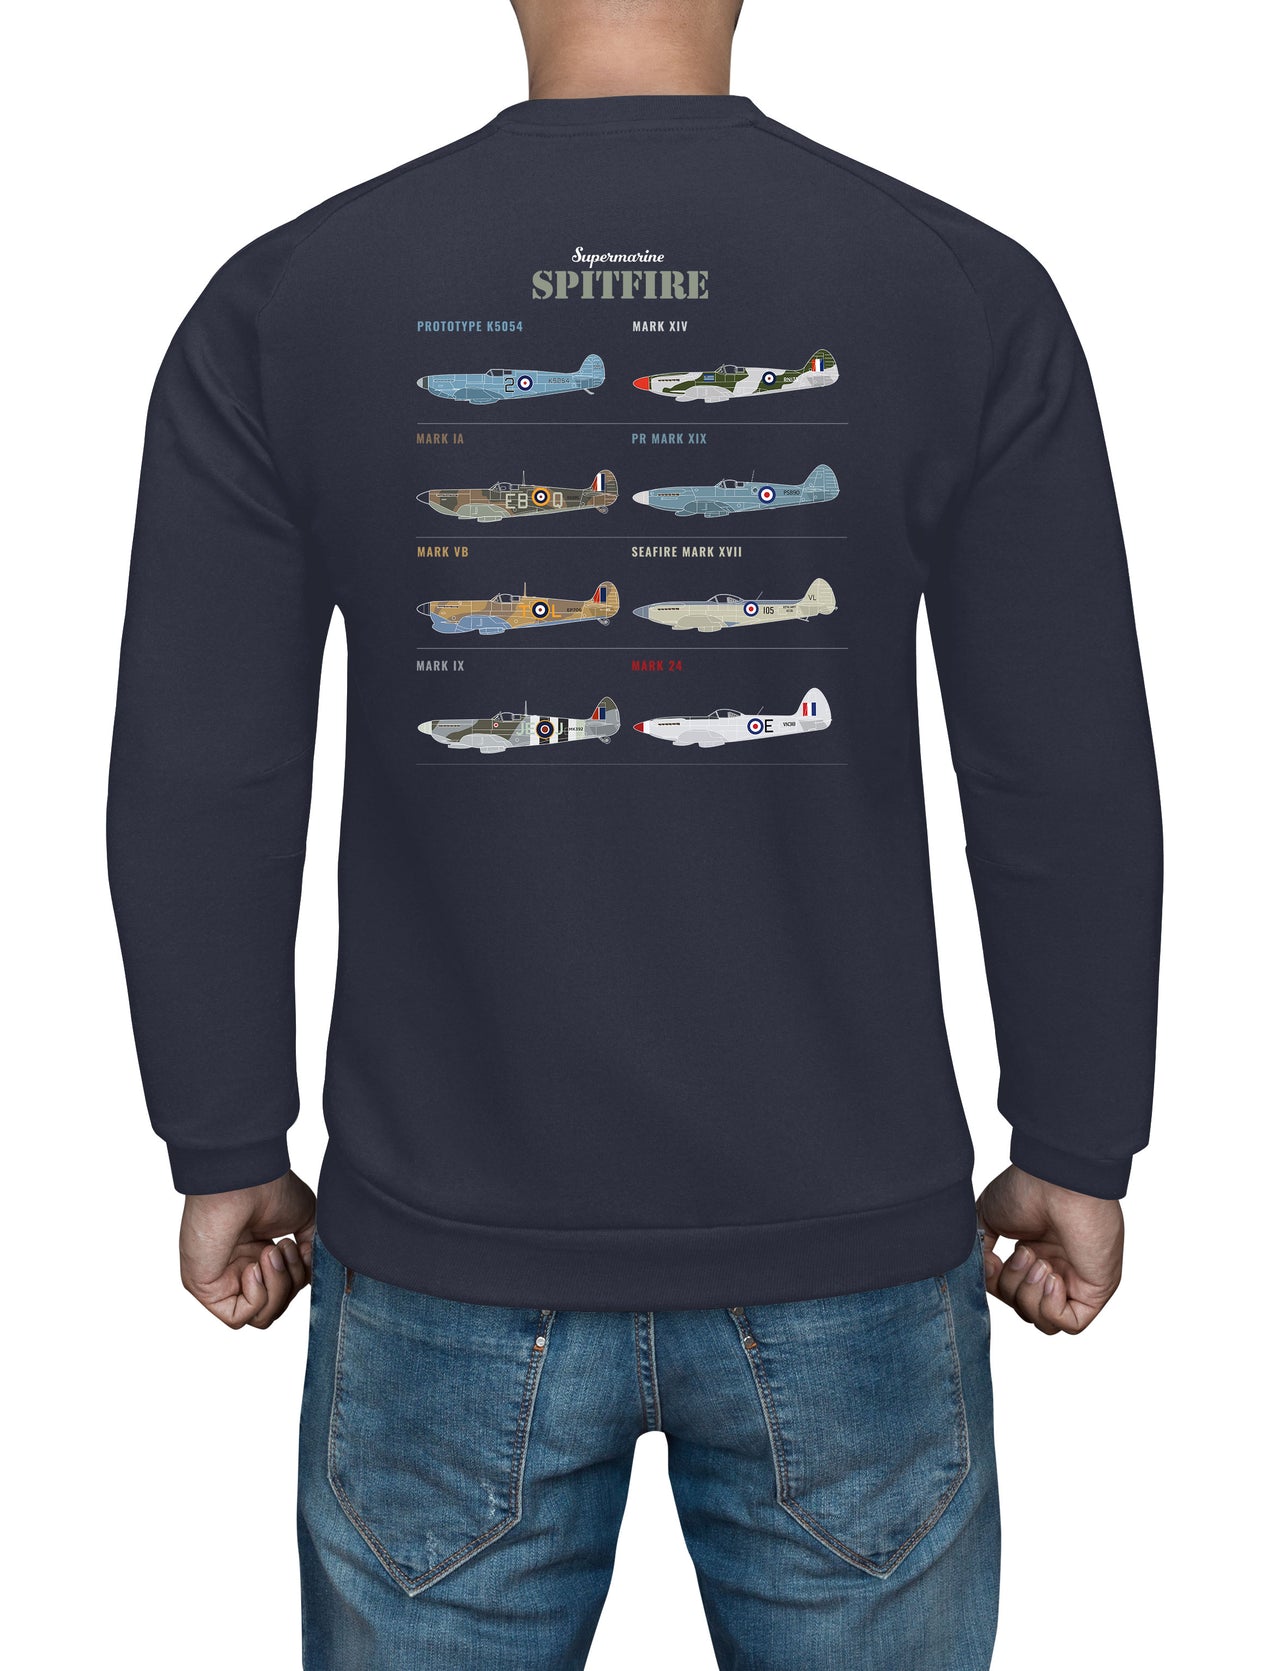 Spitfire MK VB - Sweat Shirt